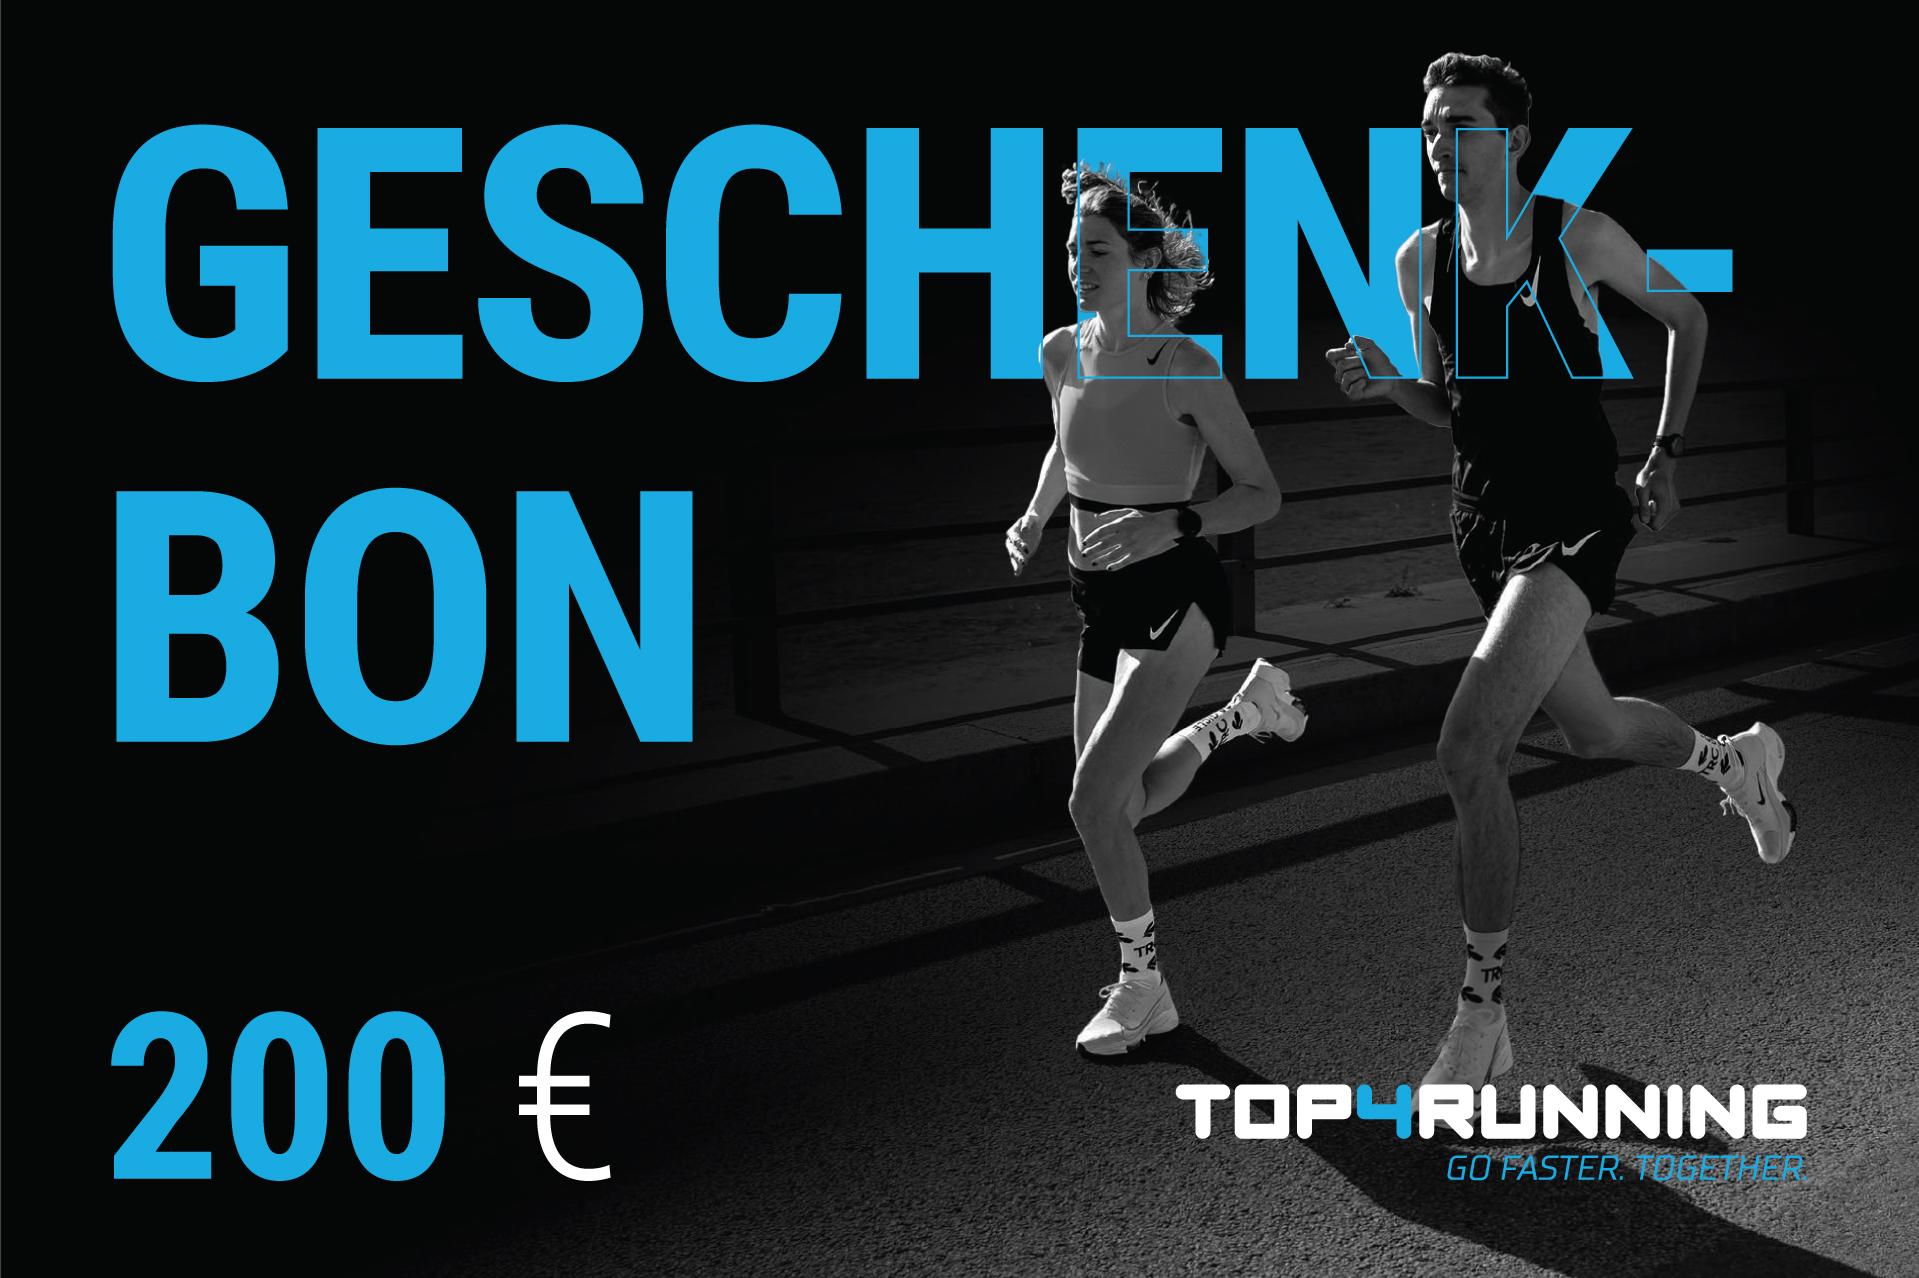 Top4running cadeaubon t.w.v 200€